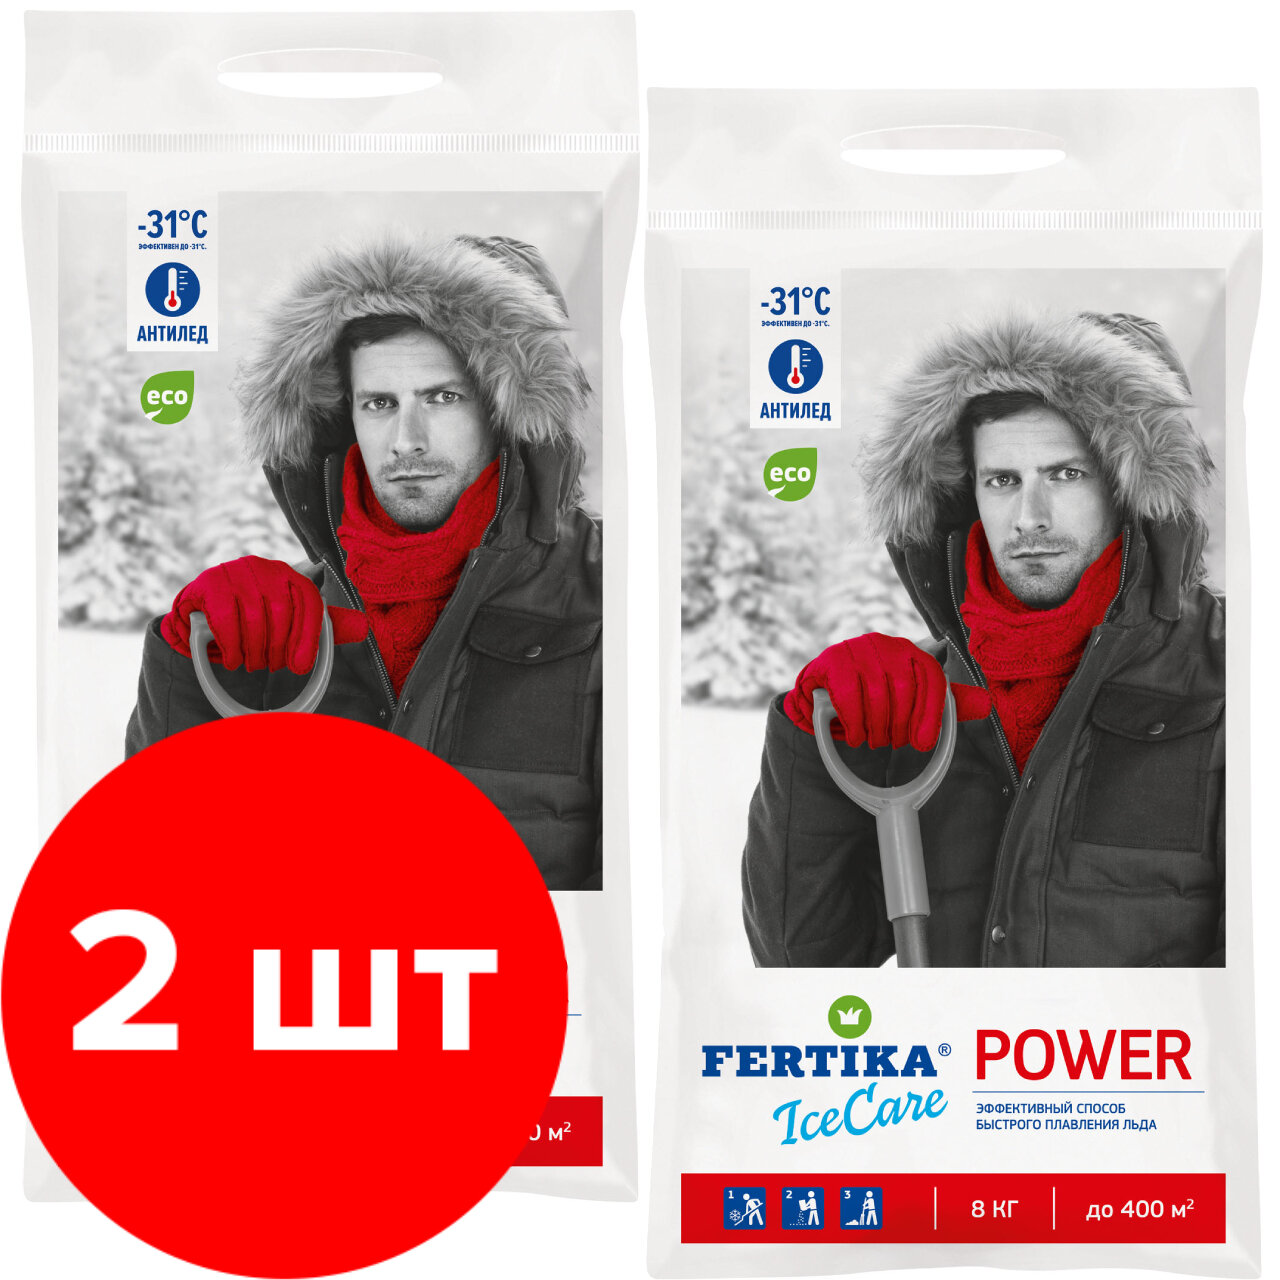 Противогололедный реагент Fertika IceCare POWER, 2 шт по 8 кг (16 кг)